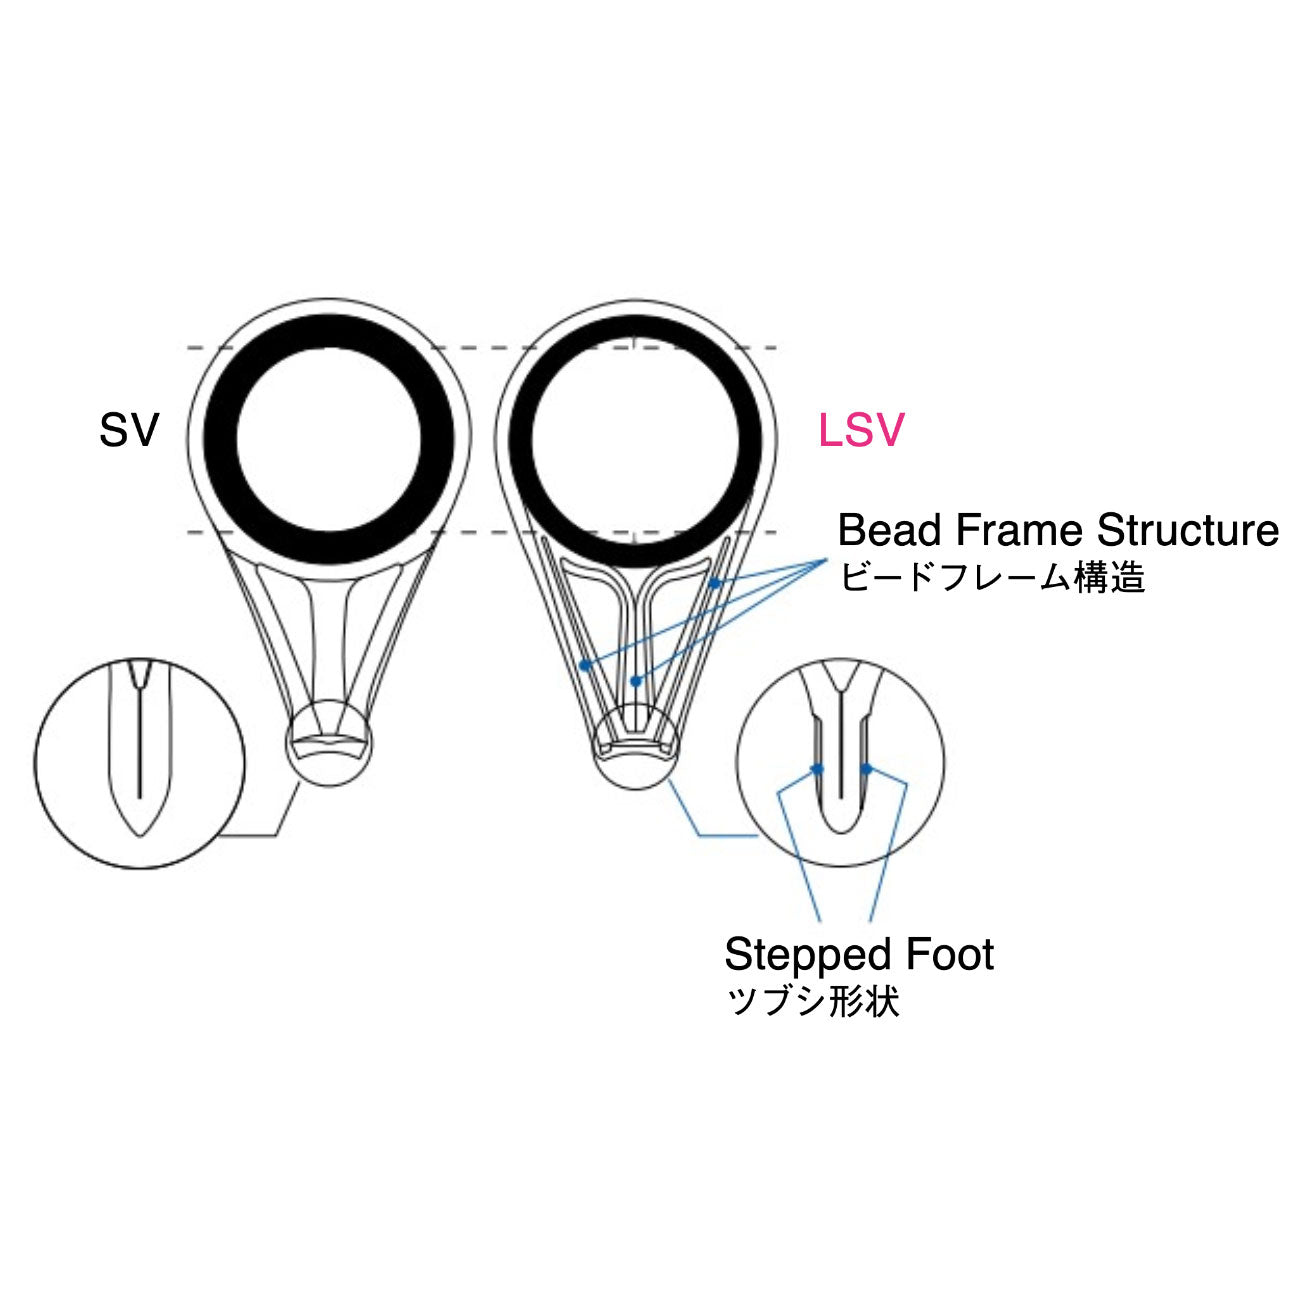 Fuji LSV Spin Cast Guide